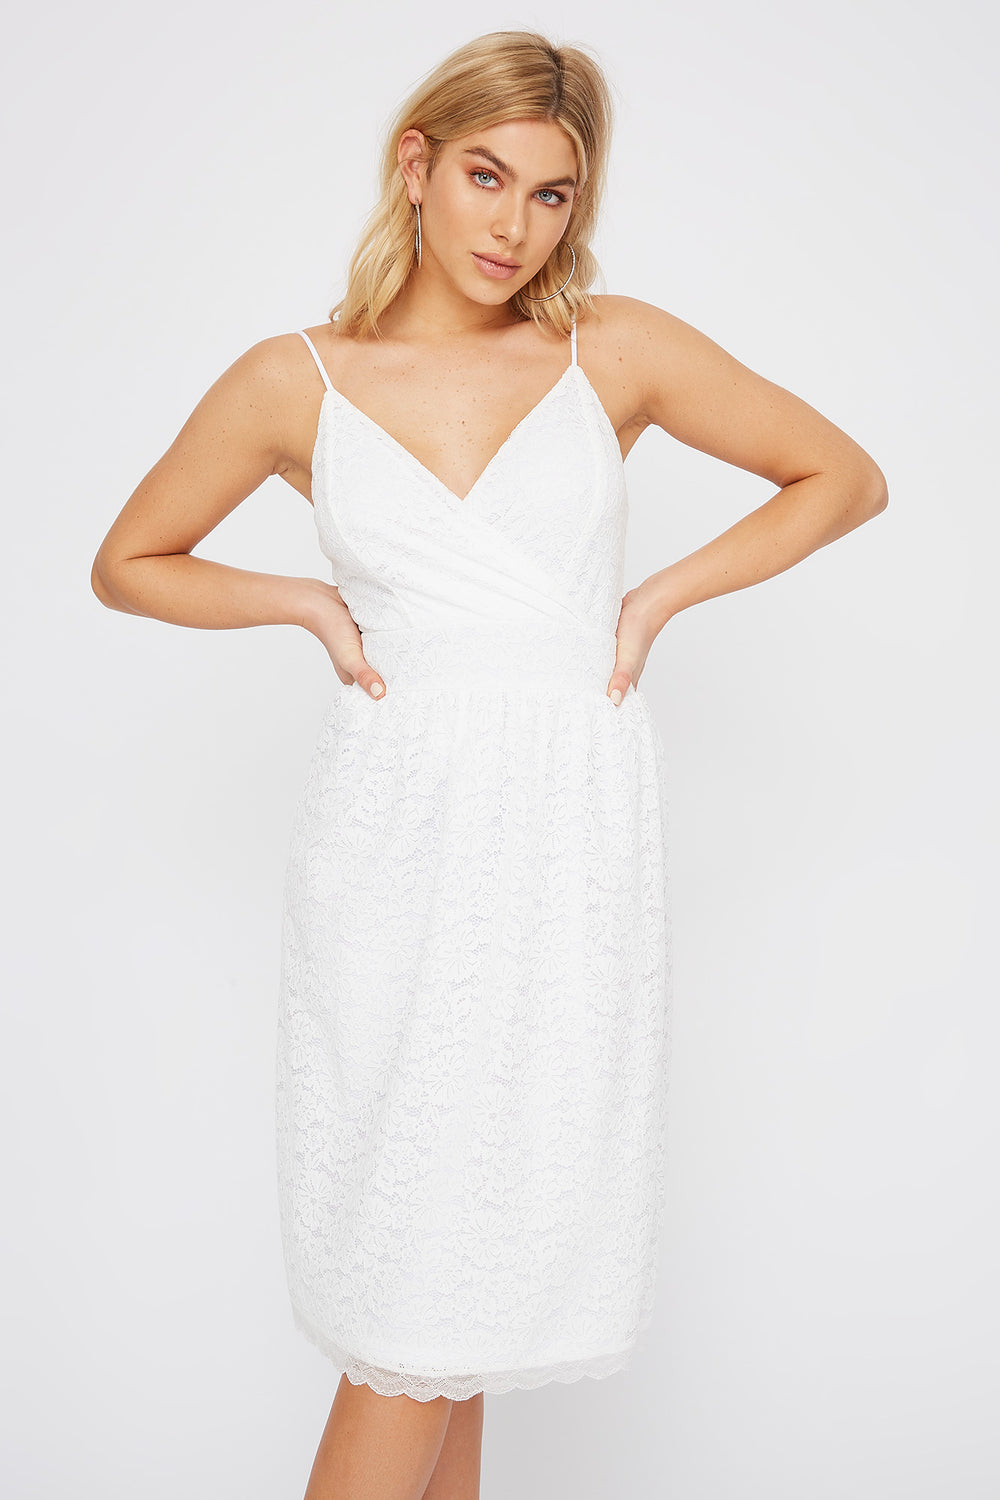 charlotte russe white dress